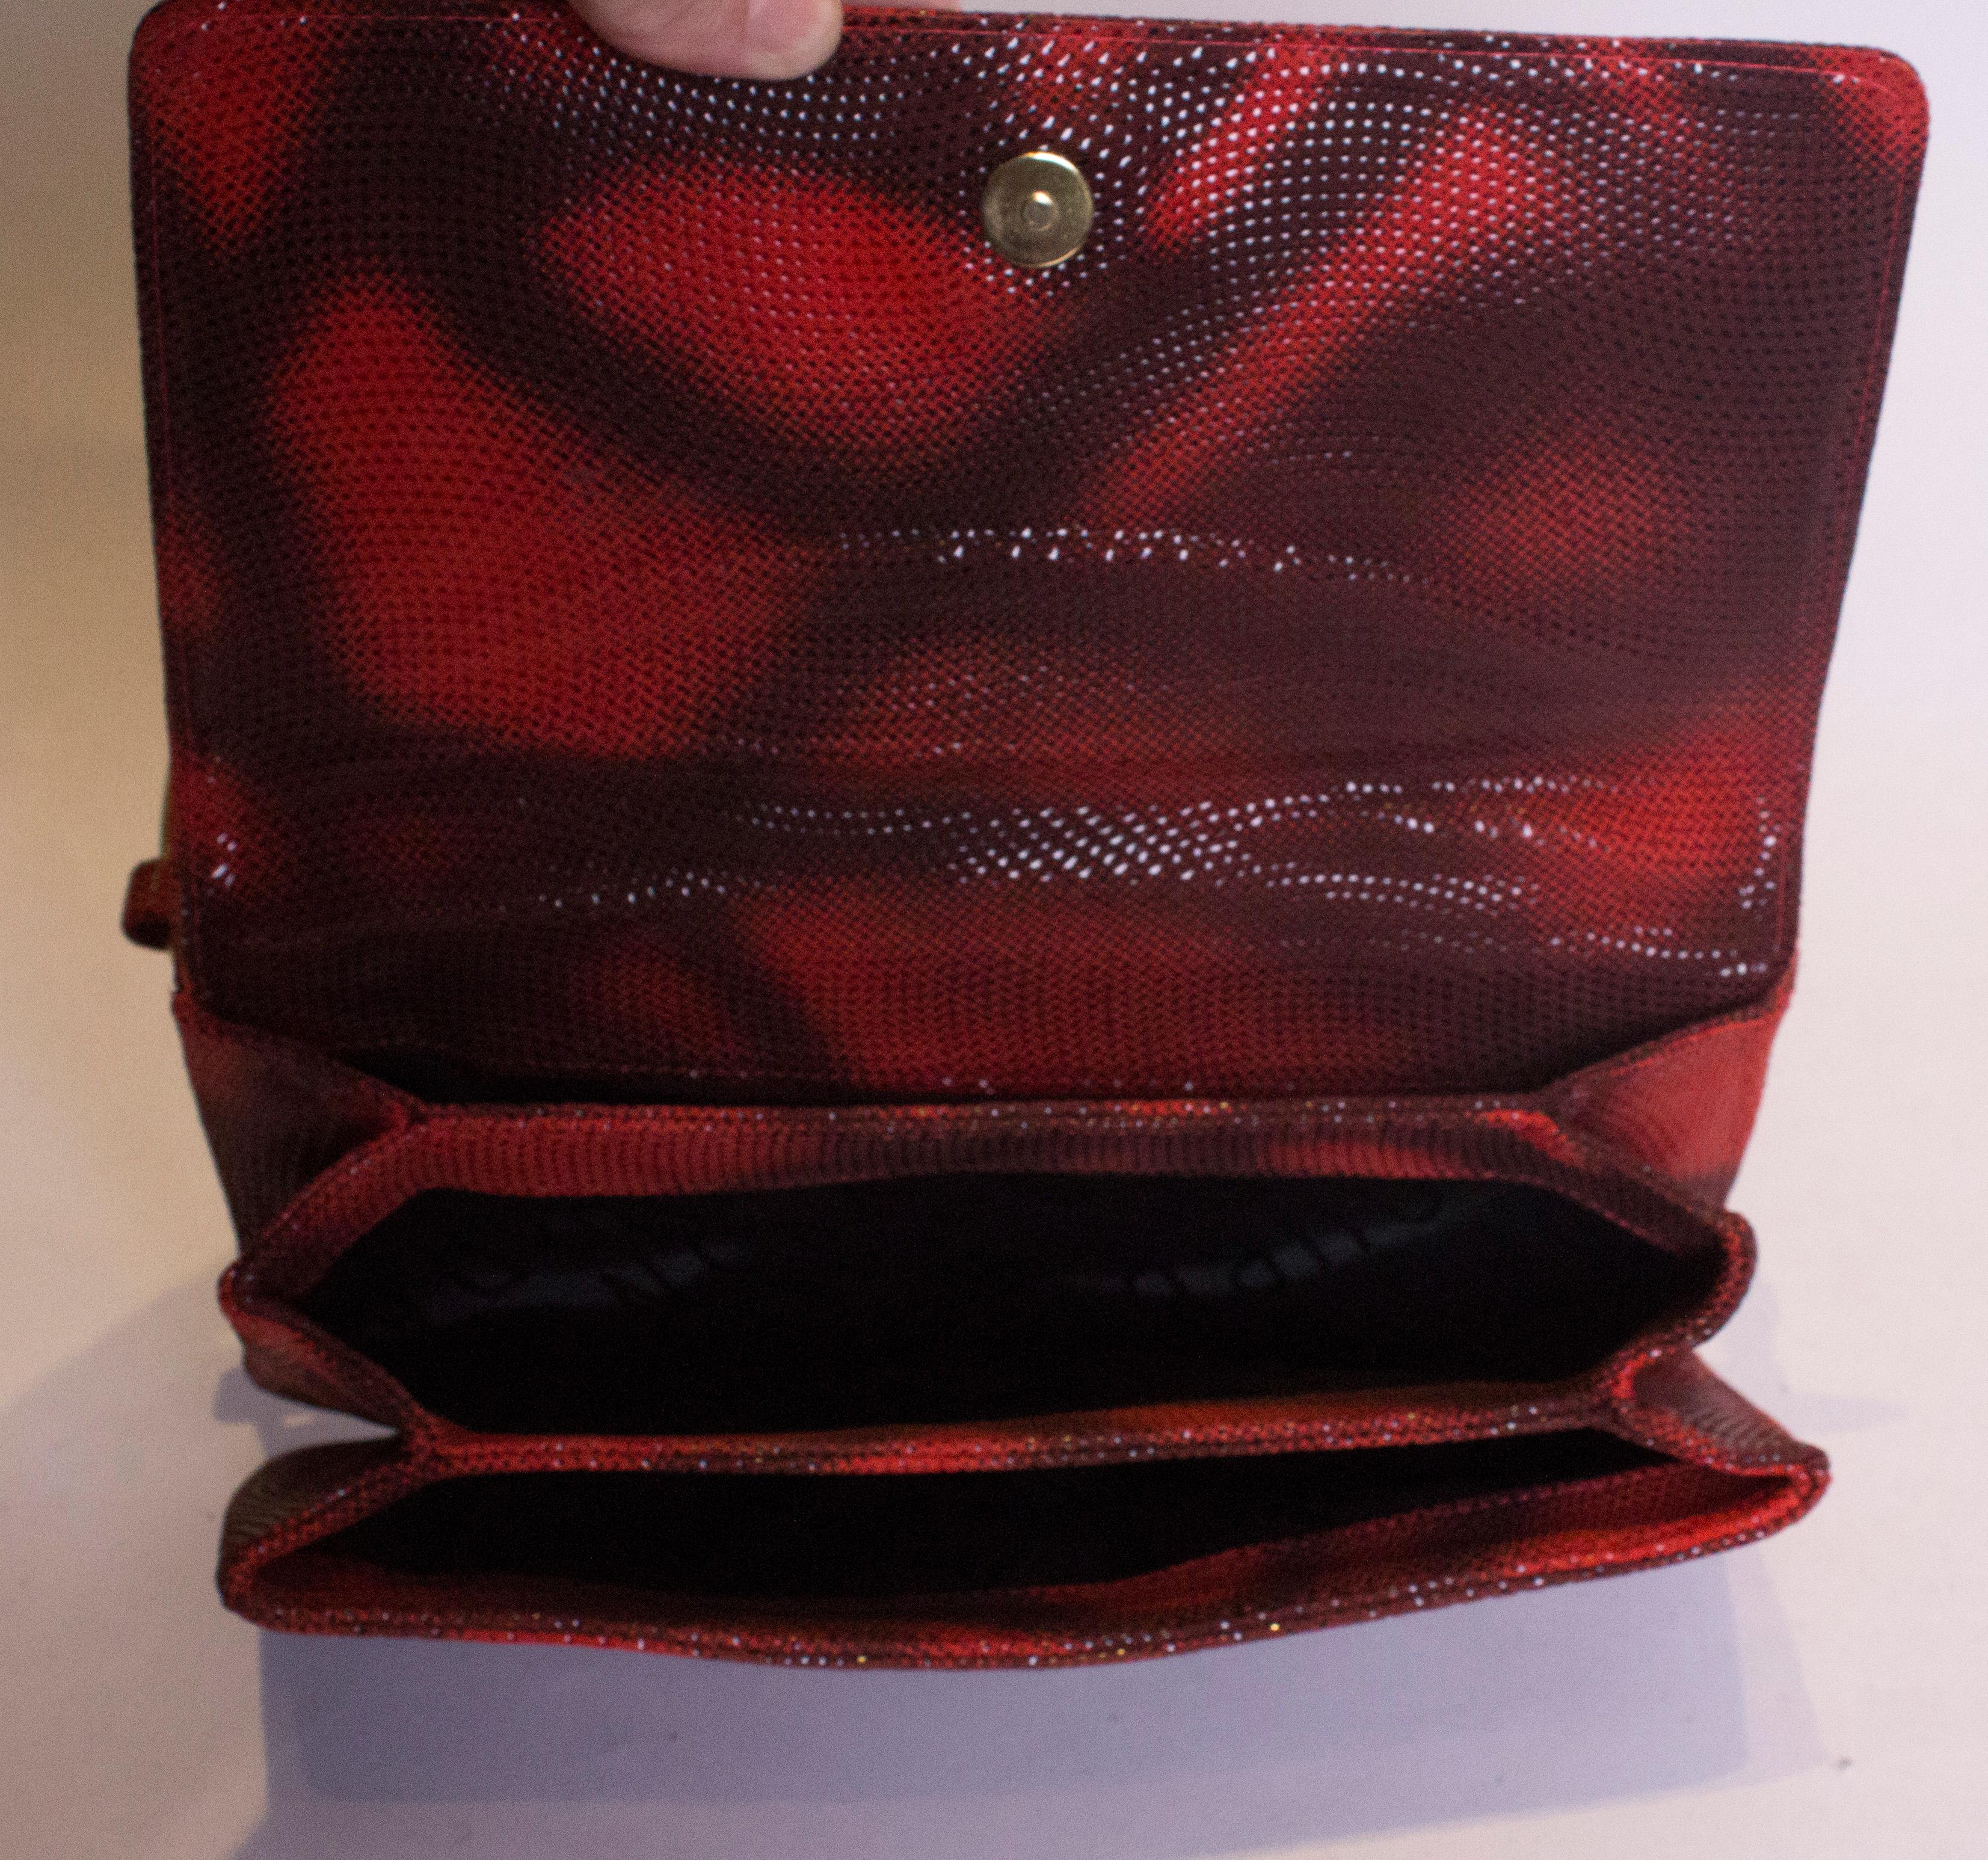 Vintage Charles Jourdan Red Handbag In Good Condition For Sale In London, GB